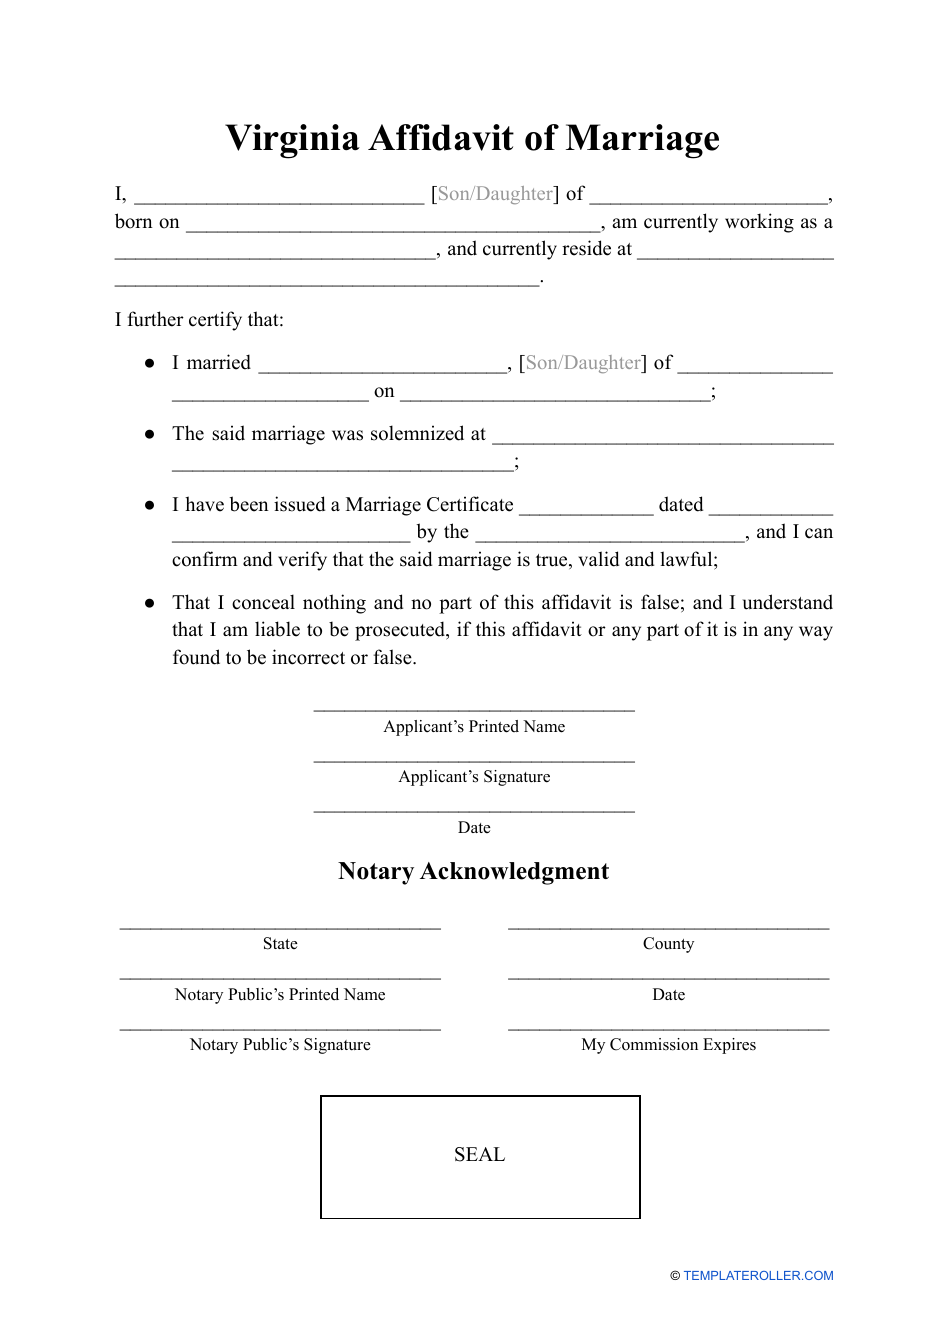 Affidavit of Marriage - Virginia, Page 1